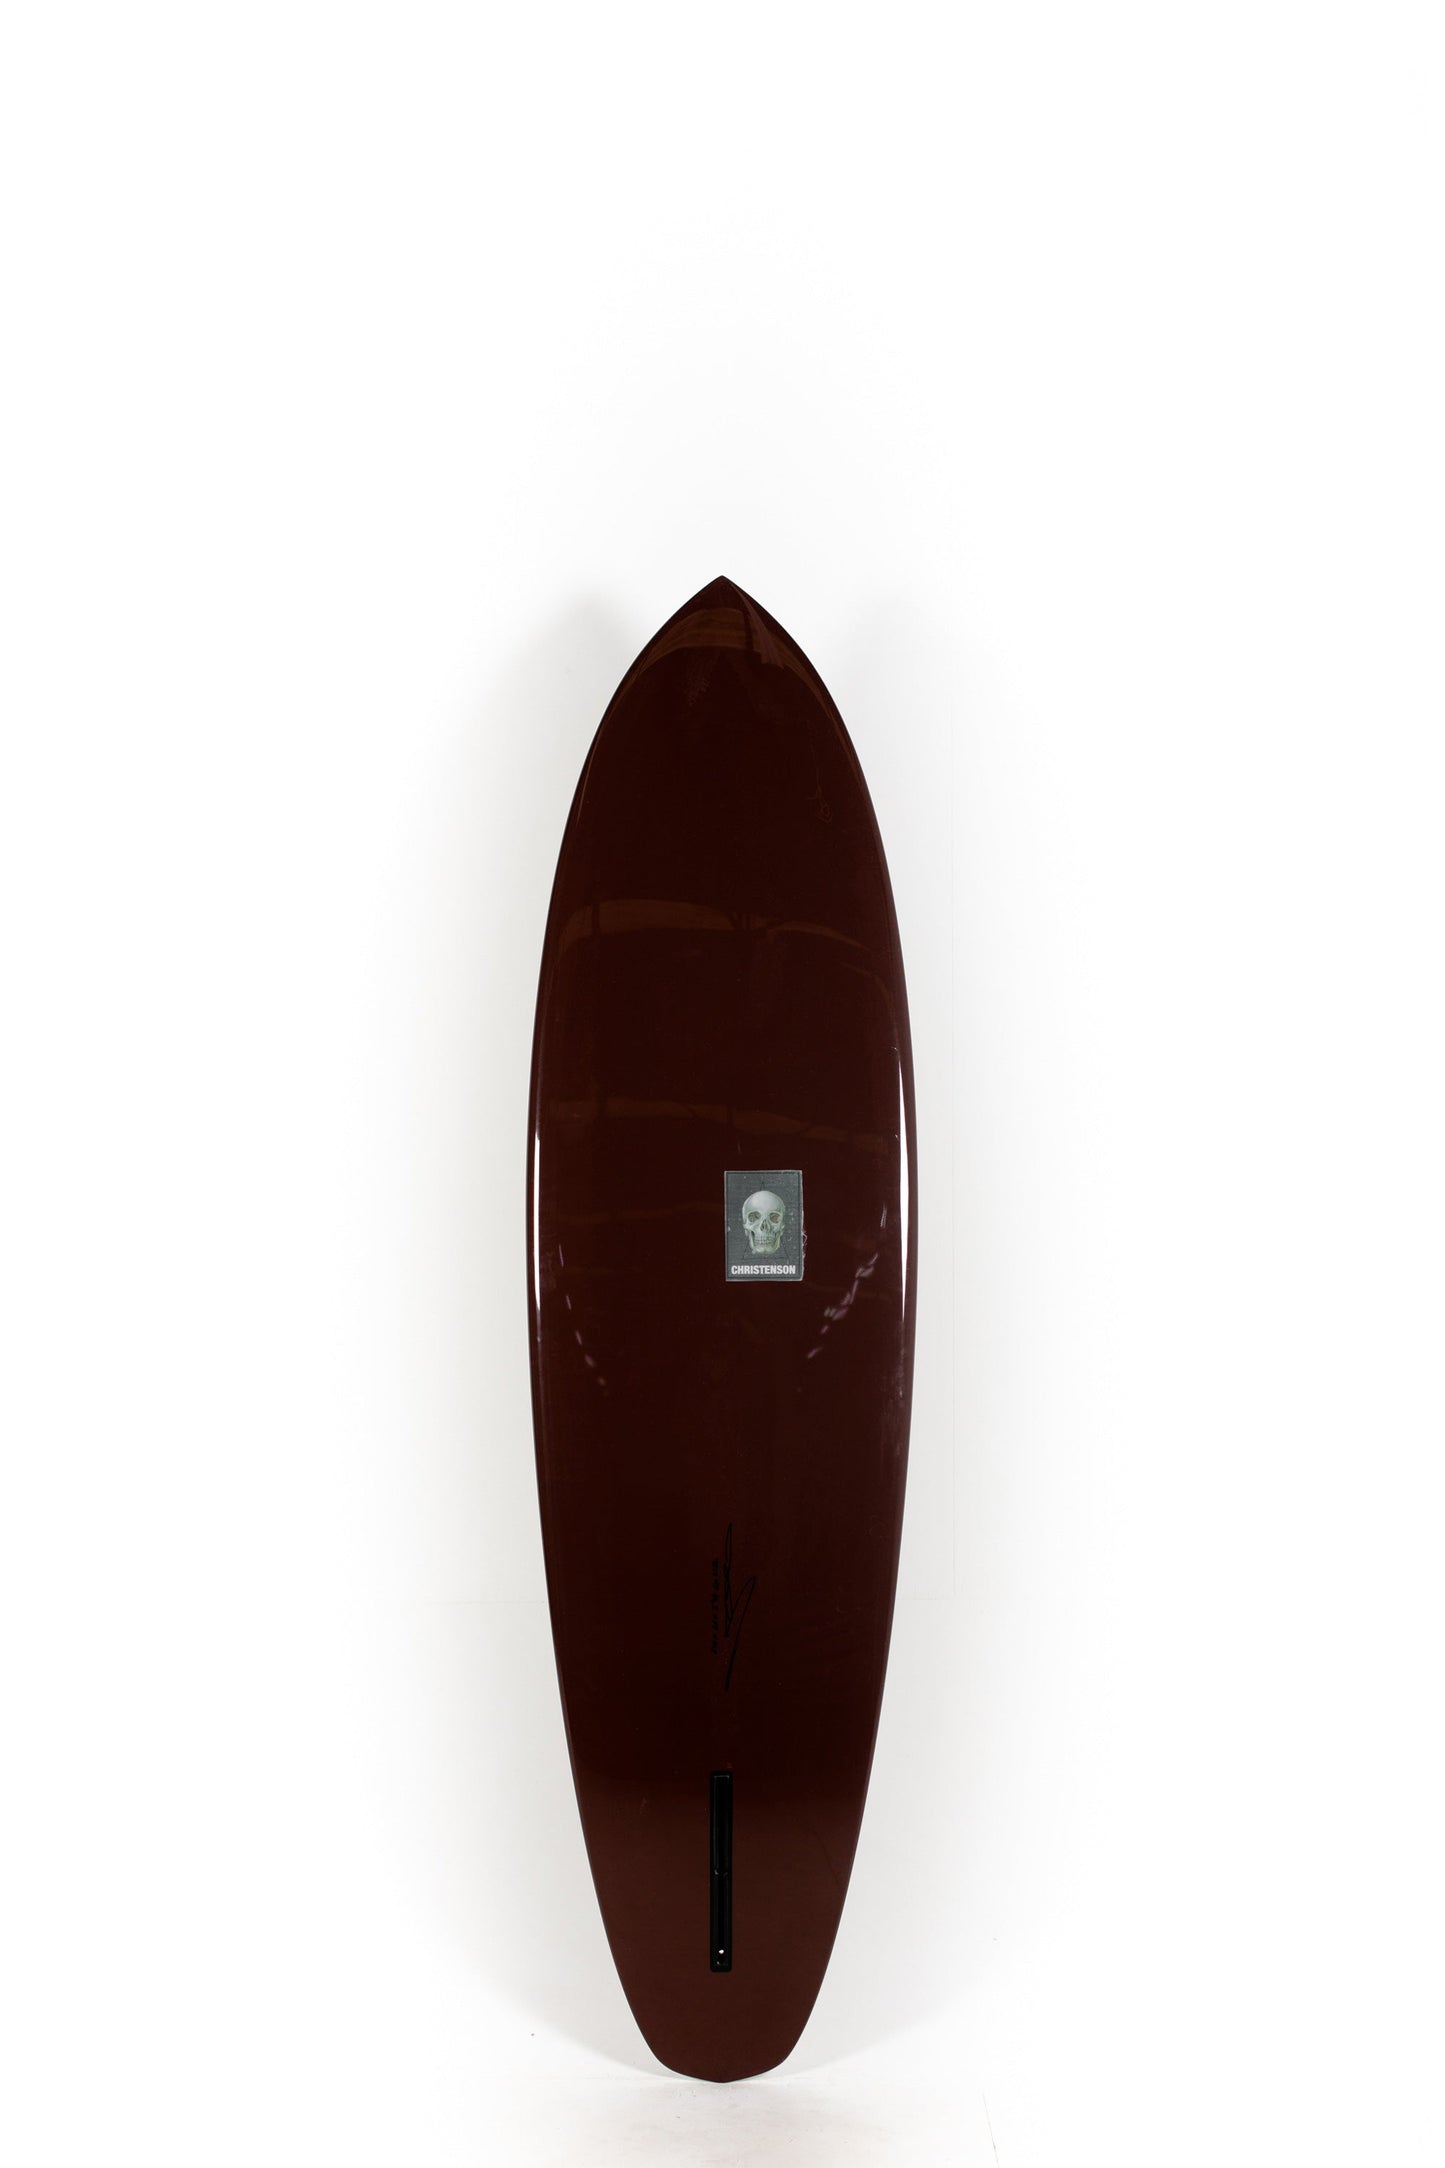 Pukas Surf Shop - Christenson Surfboards - ULTRA TRACKER - 6'10" x 21 x 2 3/4 - CX04372